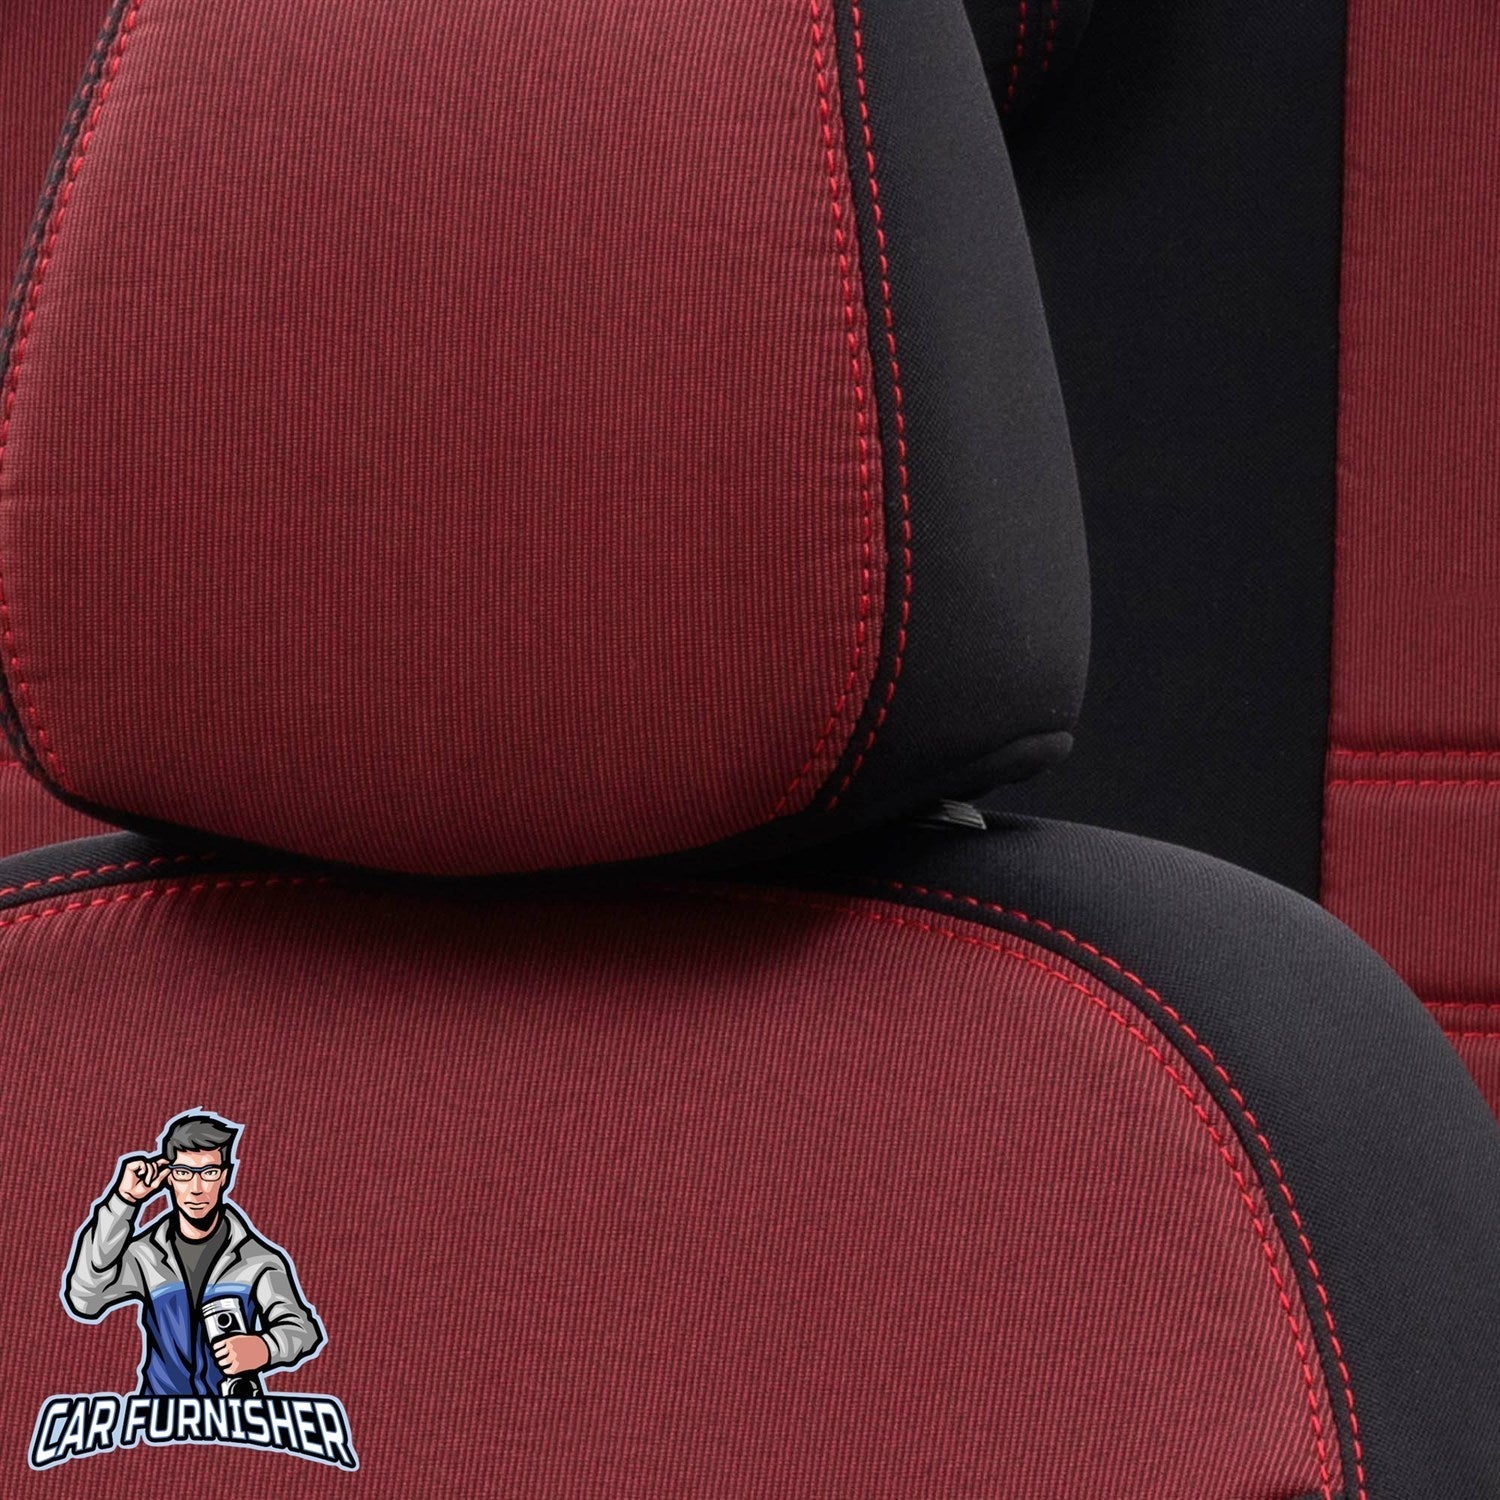 Honda HRV Seat Covers Original Jacquard Design Red Jacquard Fabric